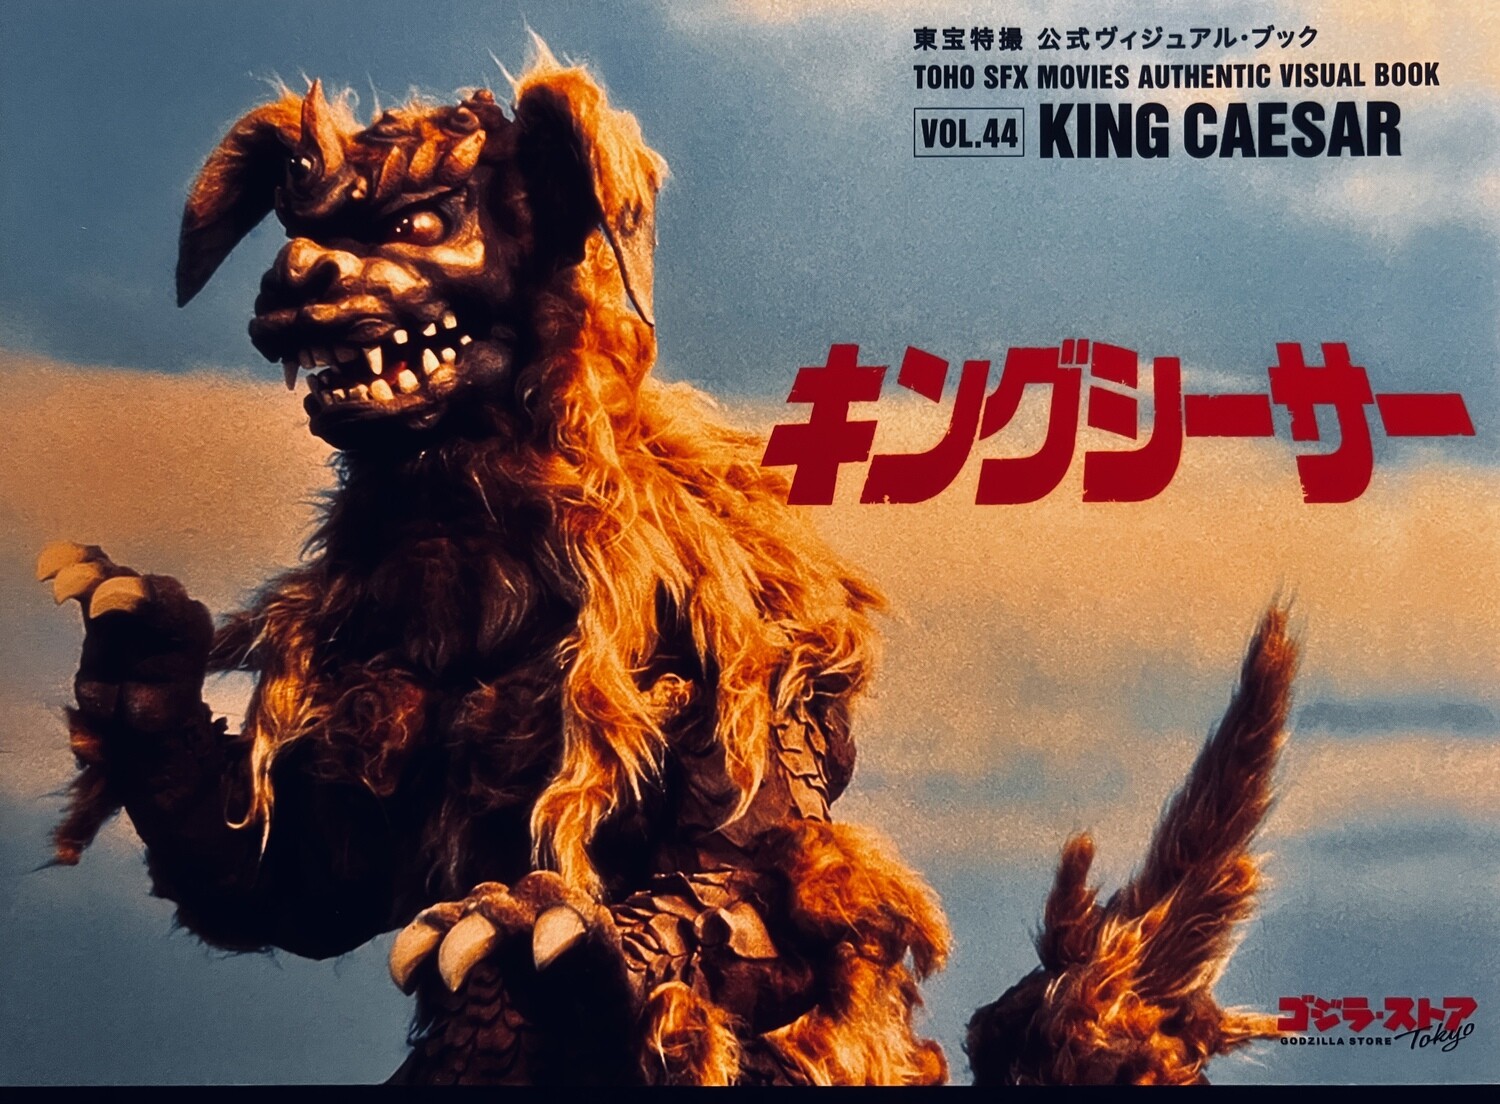 King Caesar: Vol 44 — Toho SFX Movies Authentic Visual Book (Paperback, NEW)